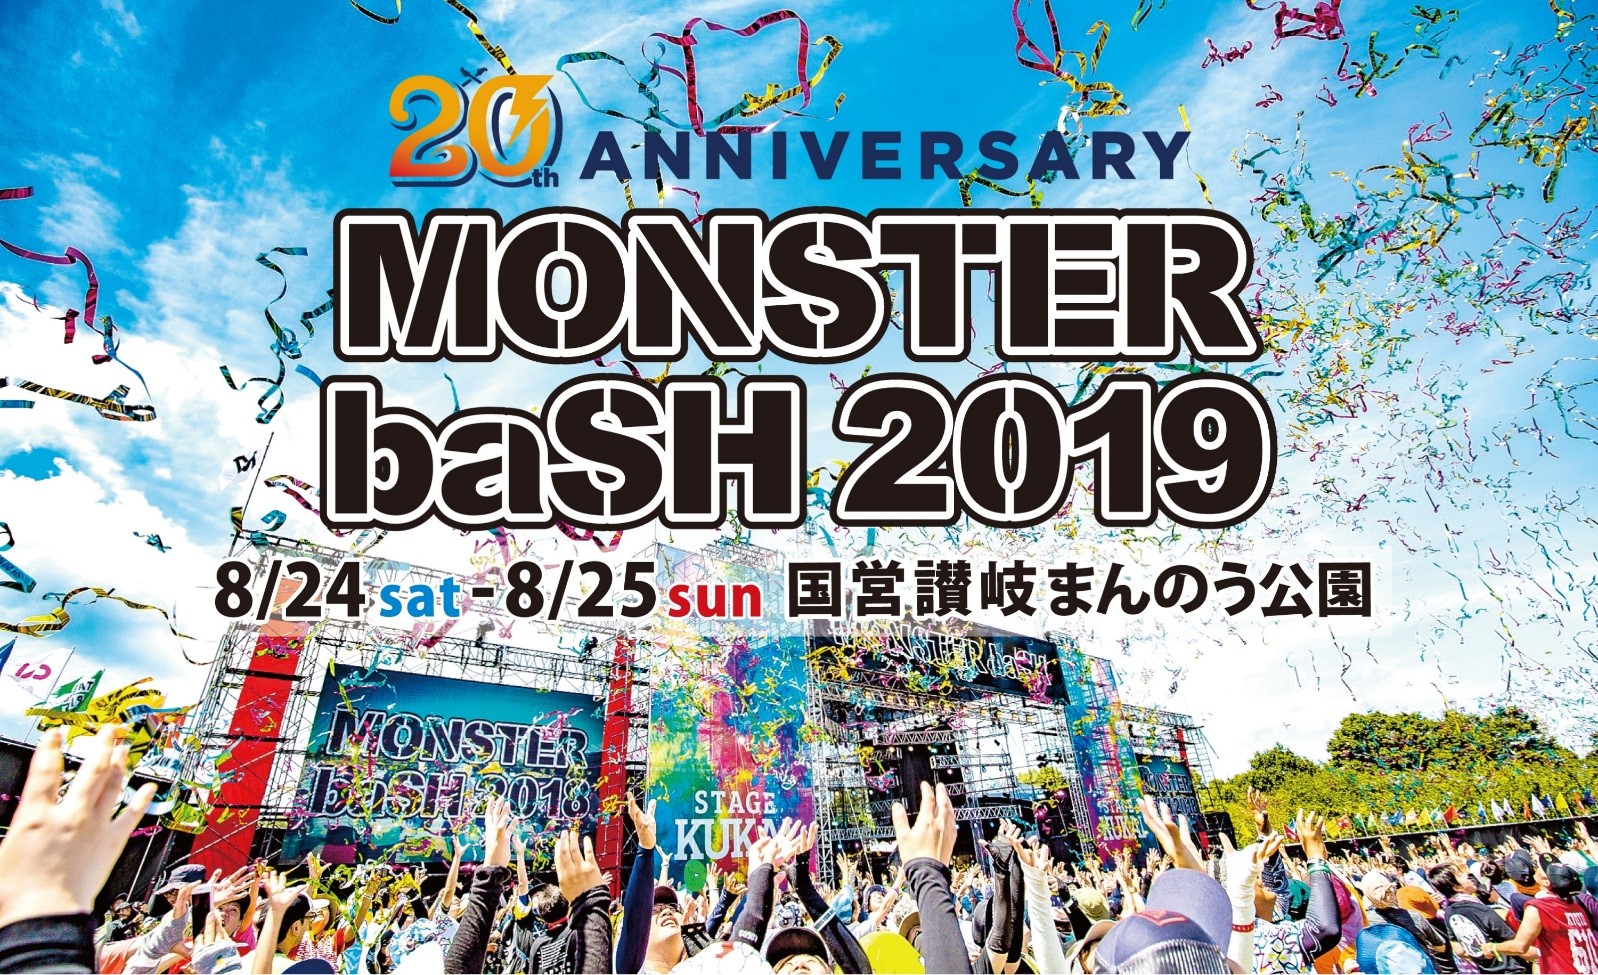 Monster Bash Tsutaya チケットプレゼントキャンペーン四国 岡山 広島エリア限定で実施中 カルチュア コンビニエンス クラブ株式会社のプレスリリース